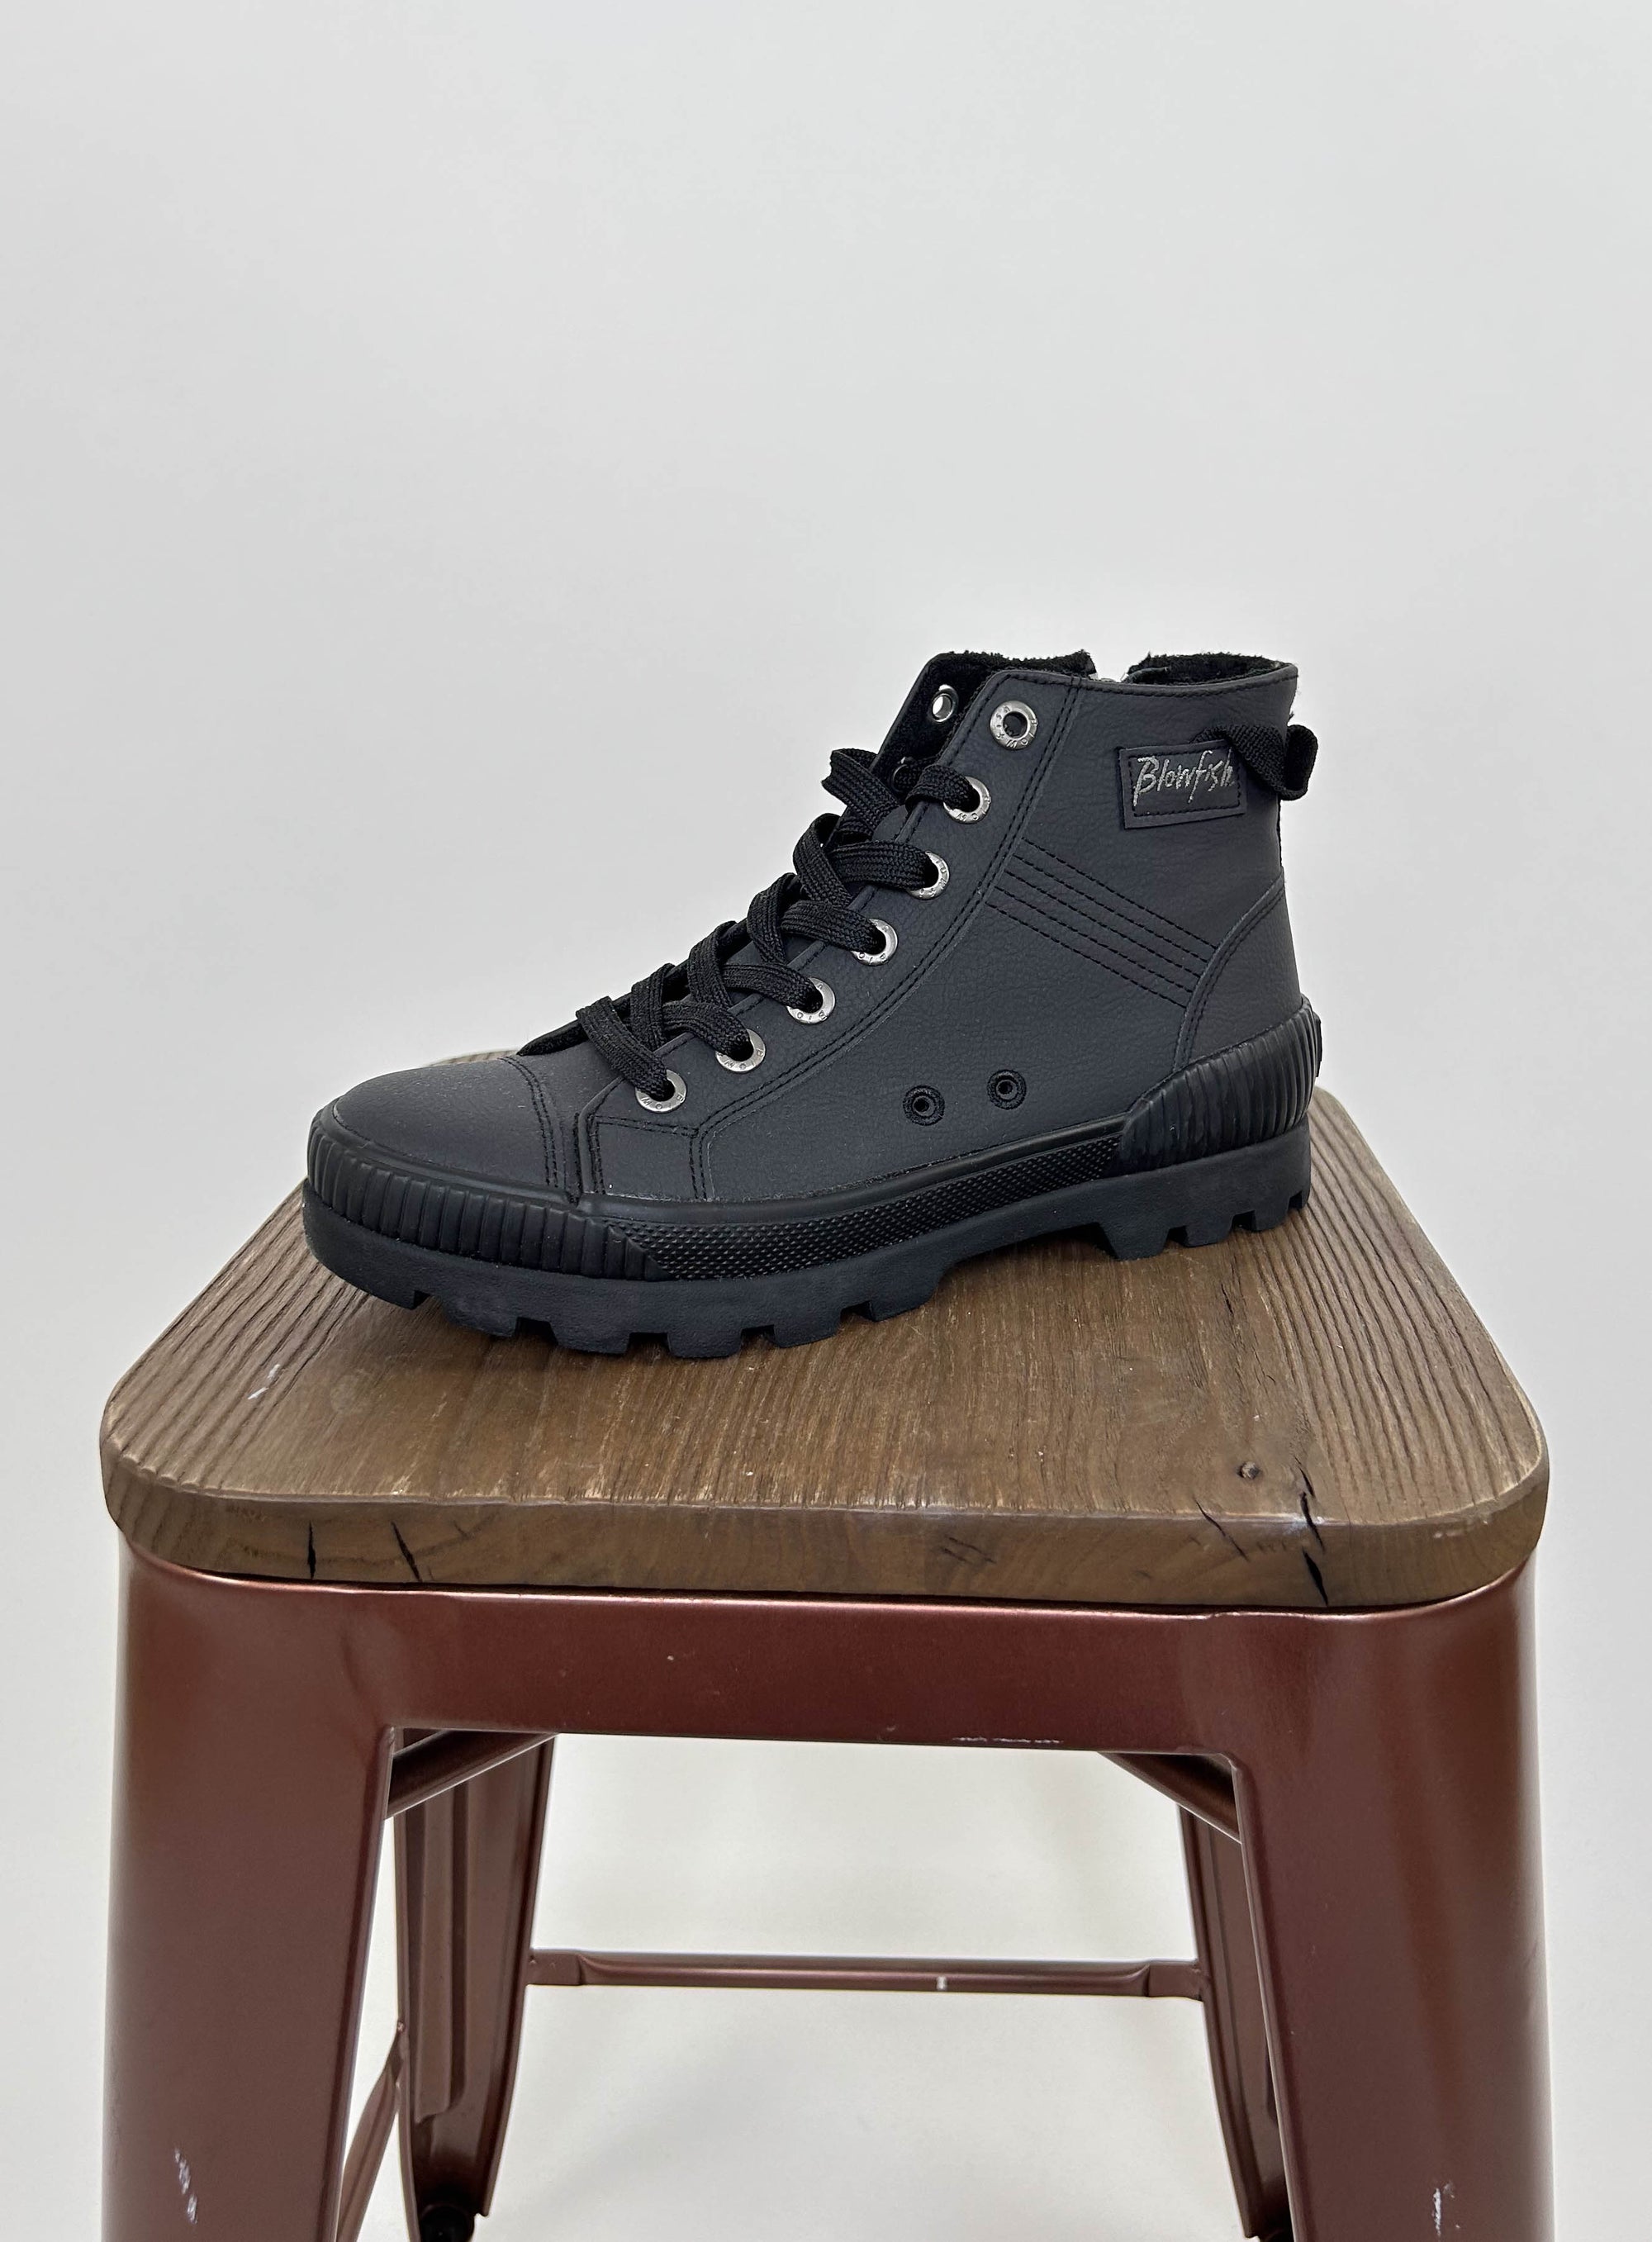 Forever Water Resistant Sneaker By Blowfish- BLACK-FINAL SALE*7.5+10*